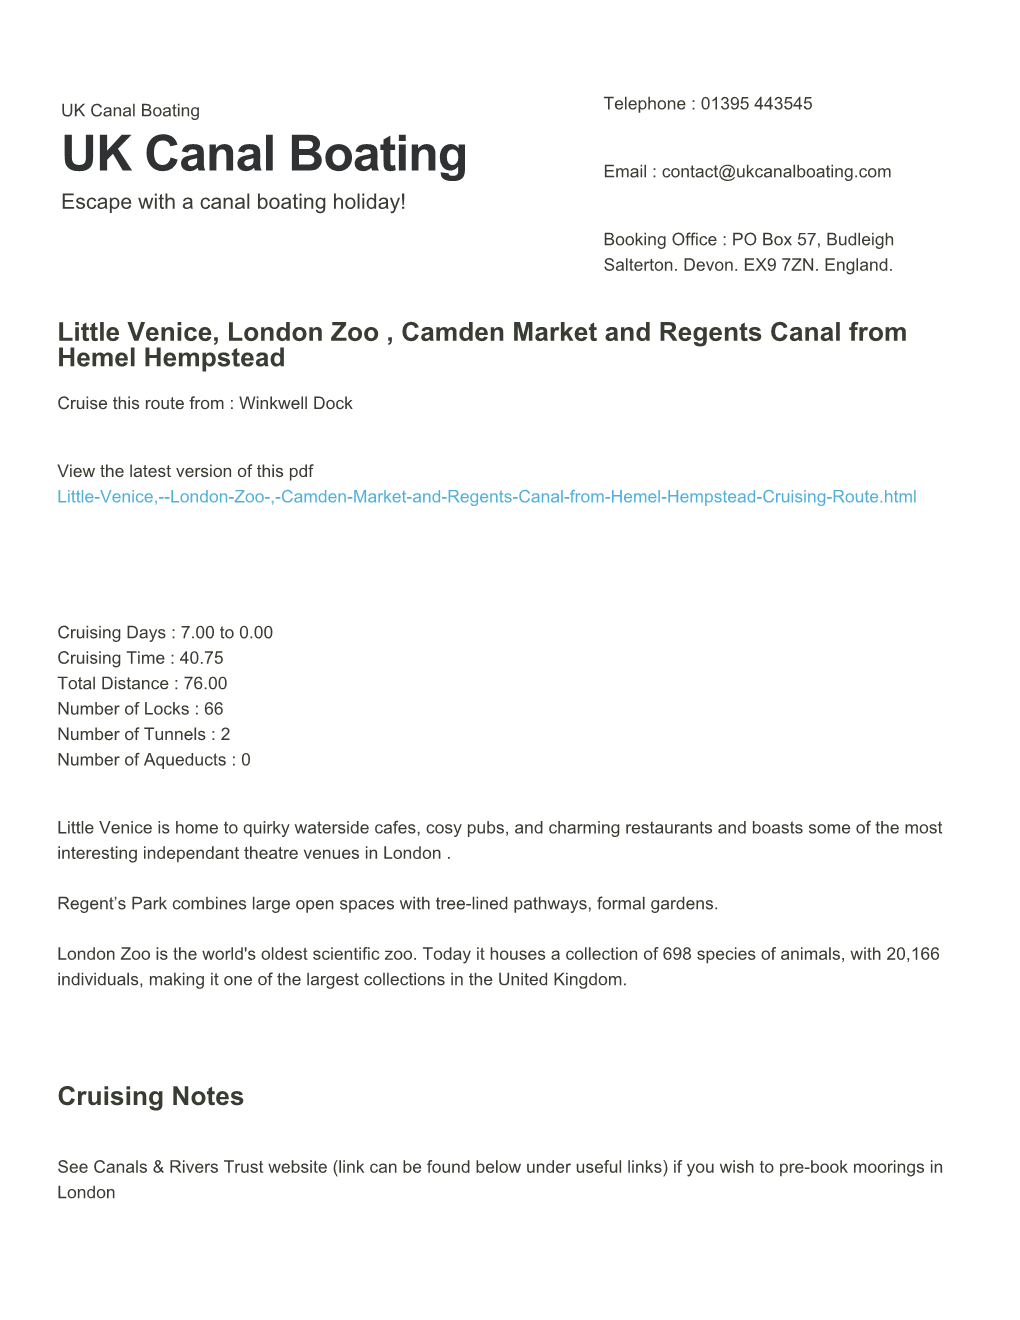 Little Venice, London Zoo , Camden Market and Regents Canal from Hemel Hempstead | UK Canal Boating